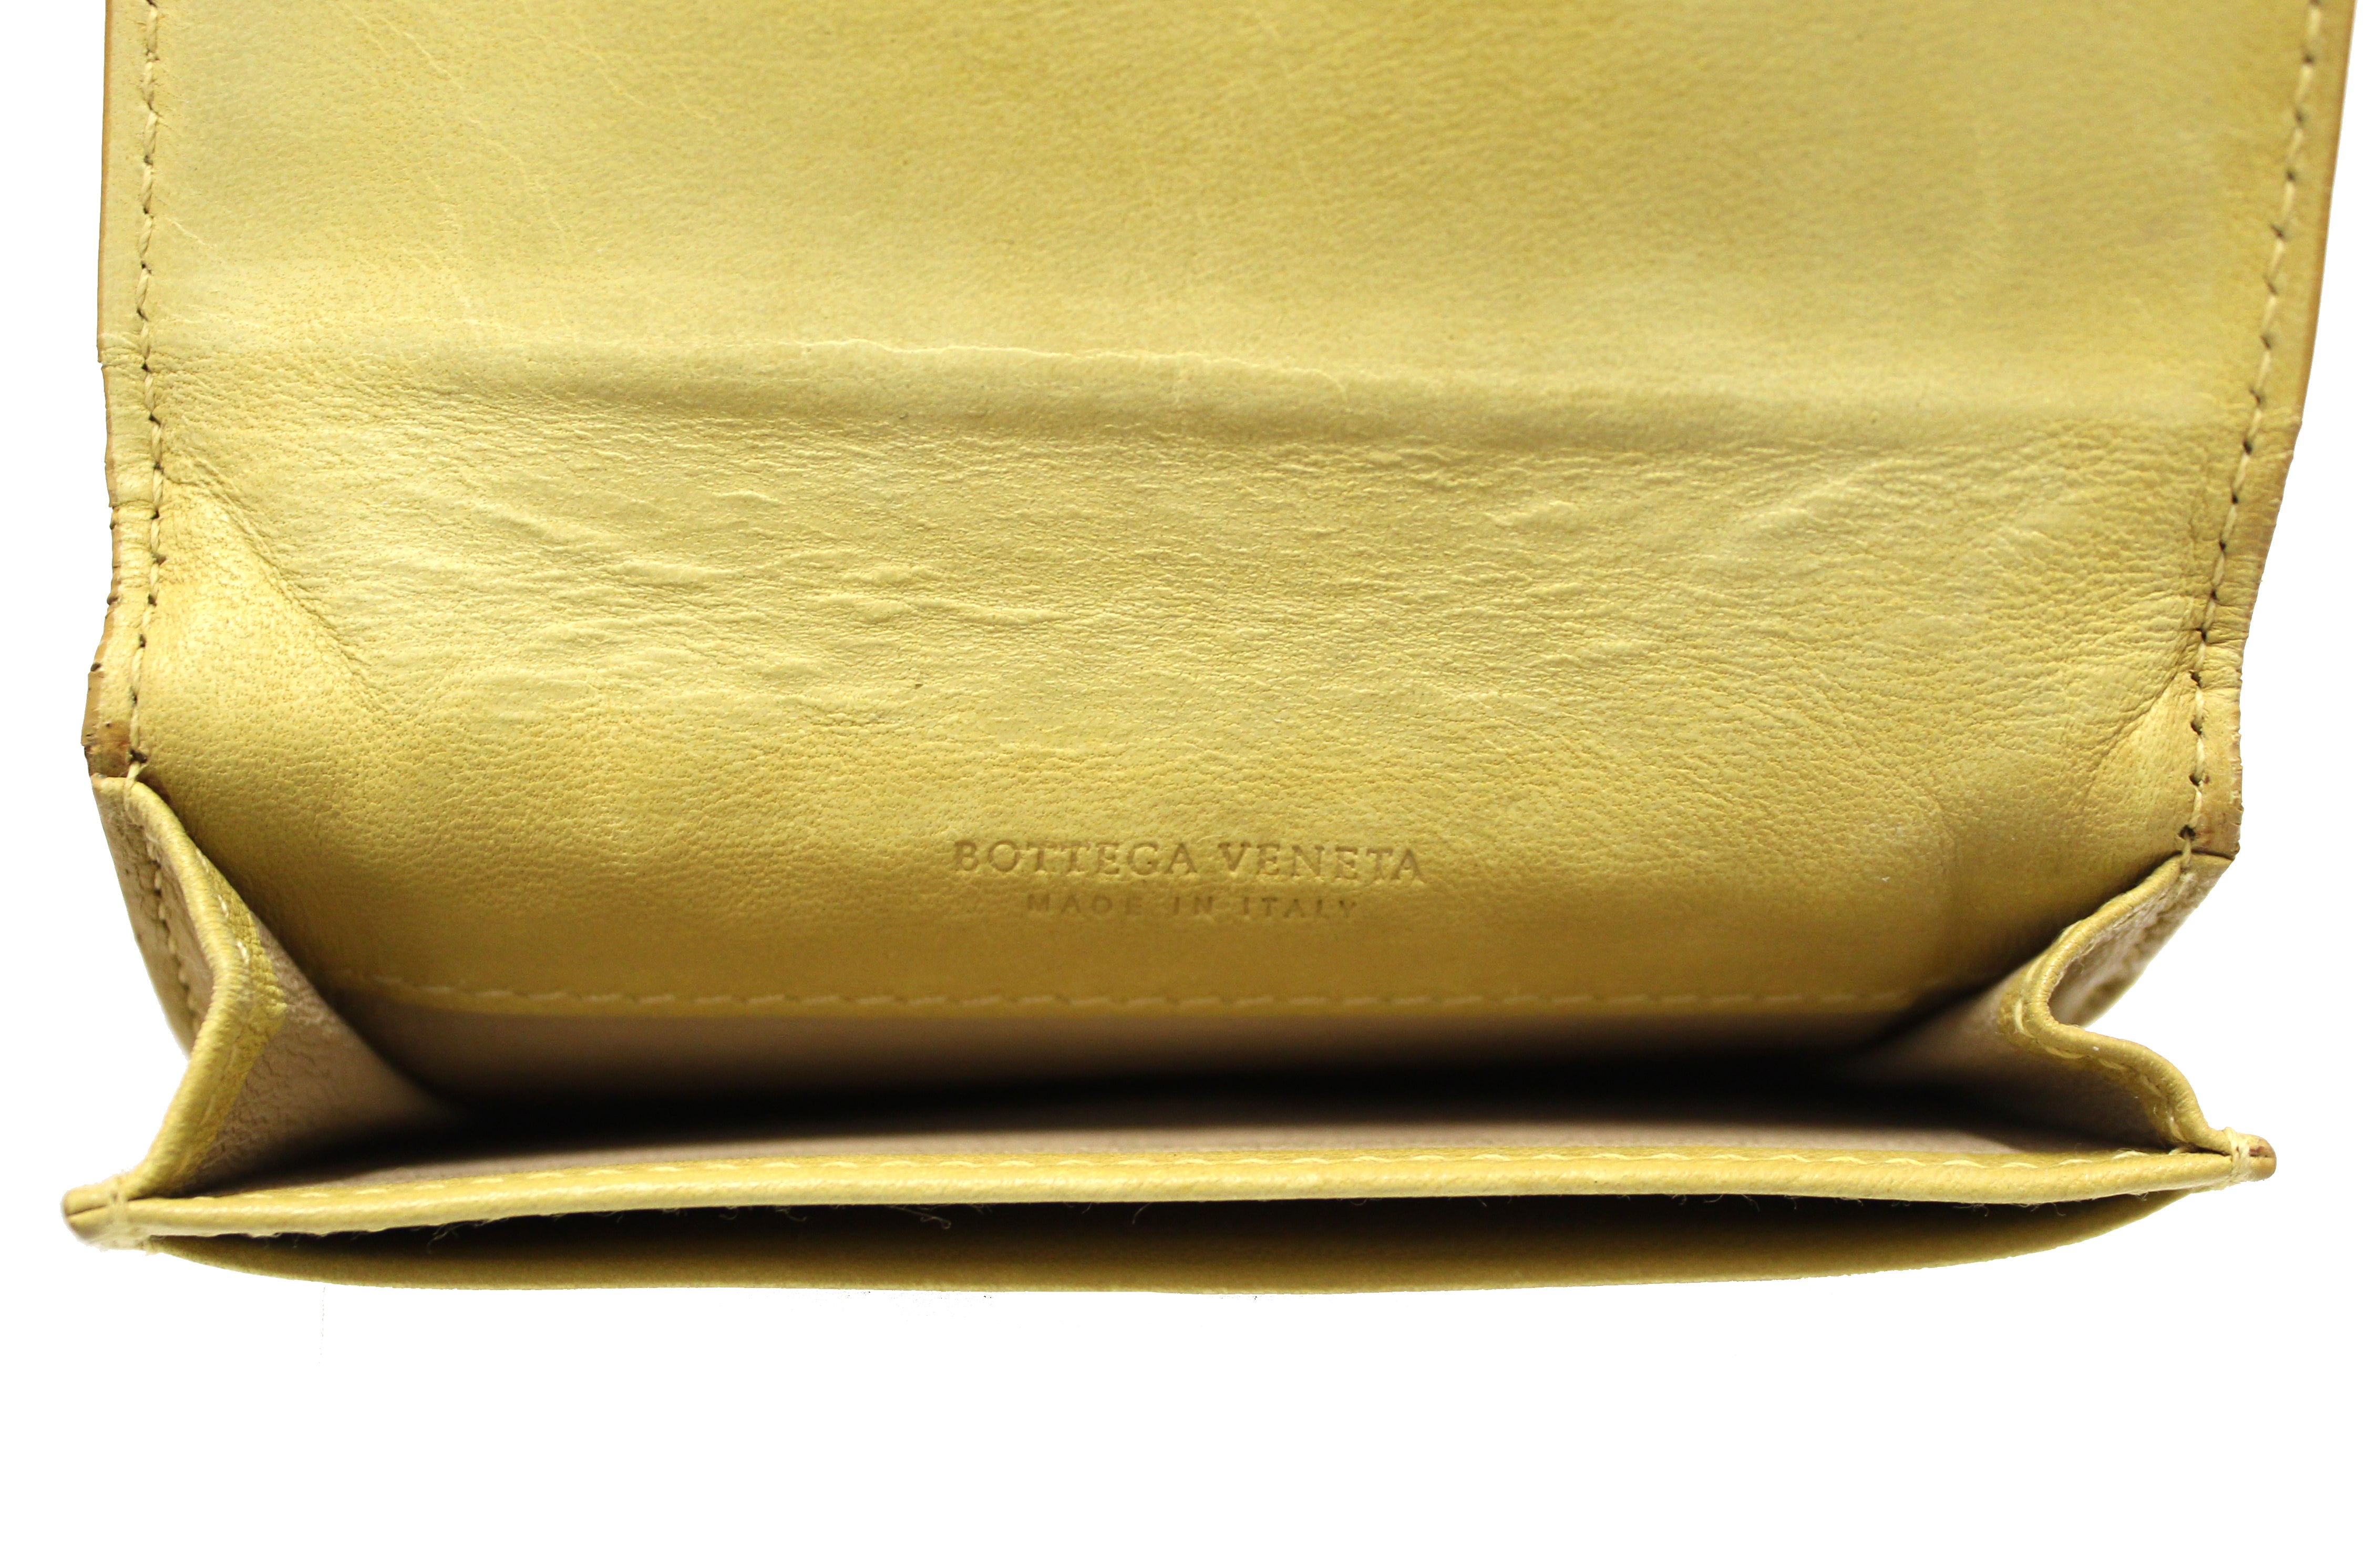 Authentic Bottega Veneta Yellow Nappa Leather Intrecciato Woven Card Case Wallet